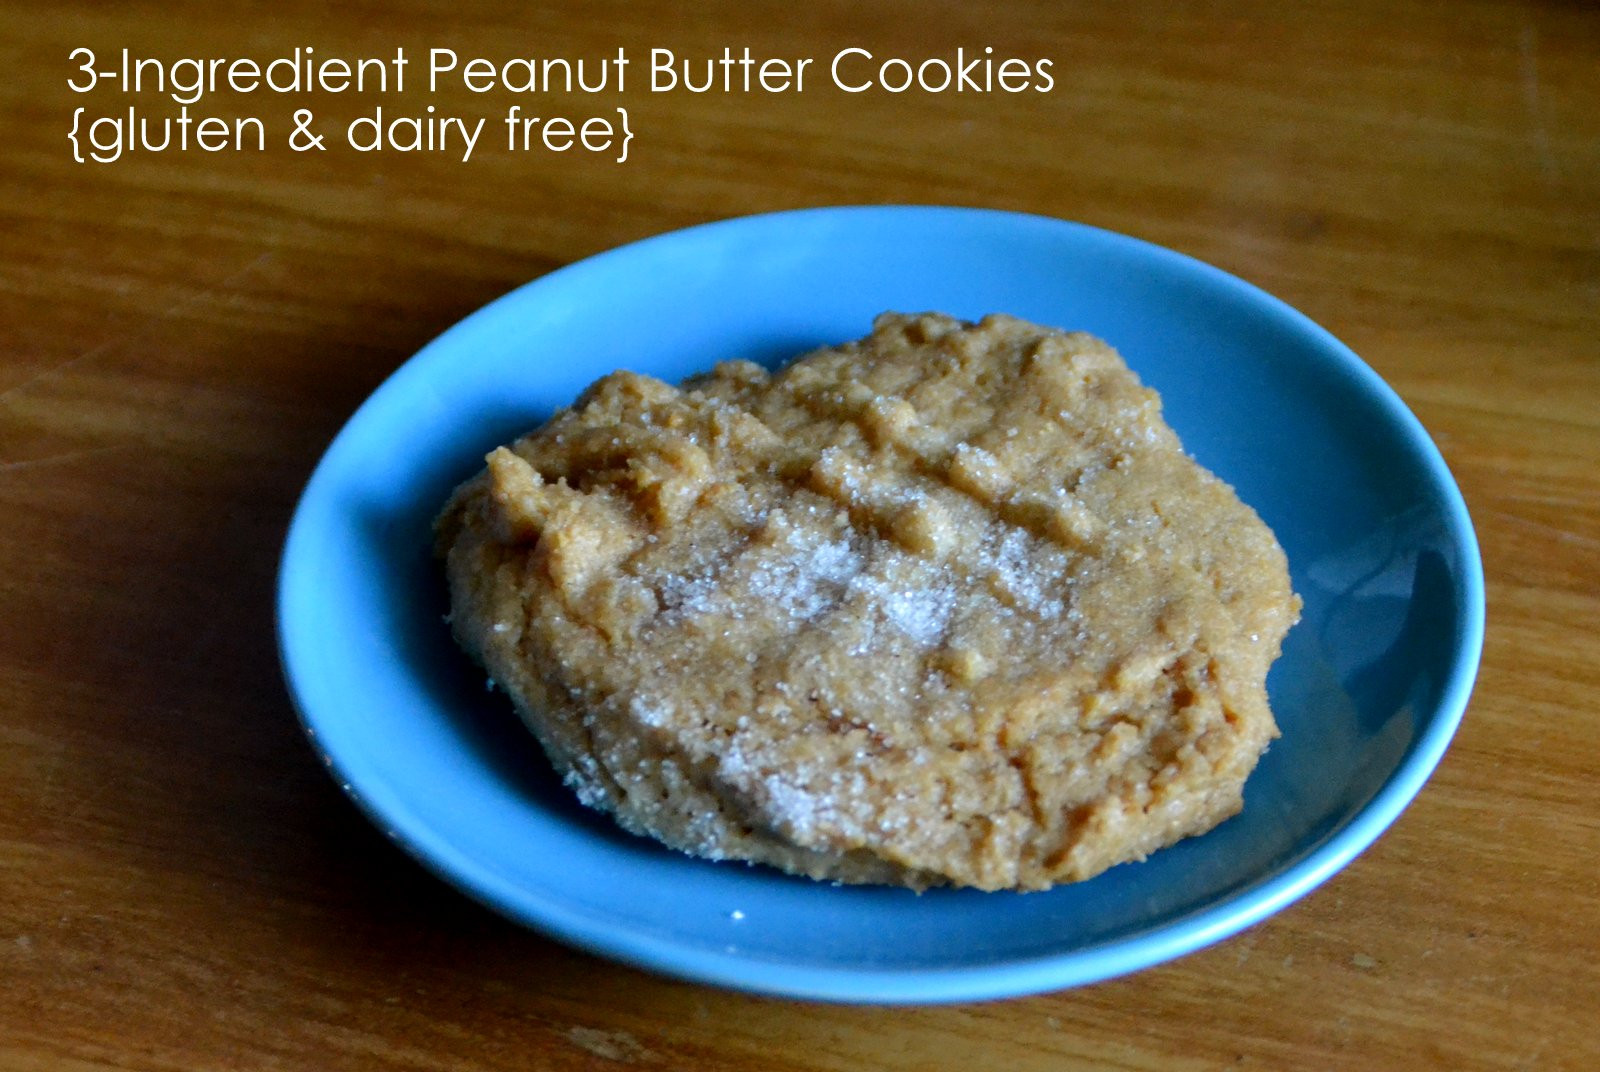 Gluten Free Peanut Butter Cookies 3 Ingredients
 ThriceTheSpice 3 Ingre nt Peanut Butter Cookies gluten